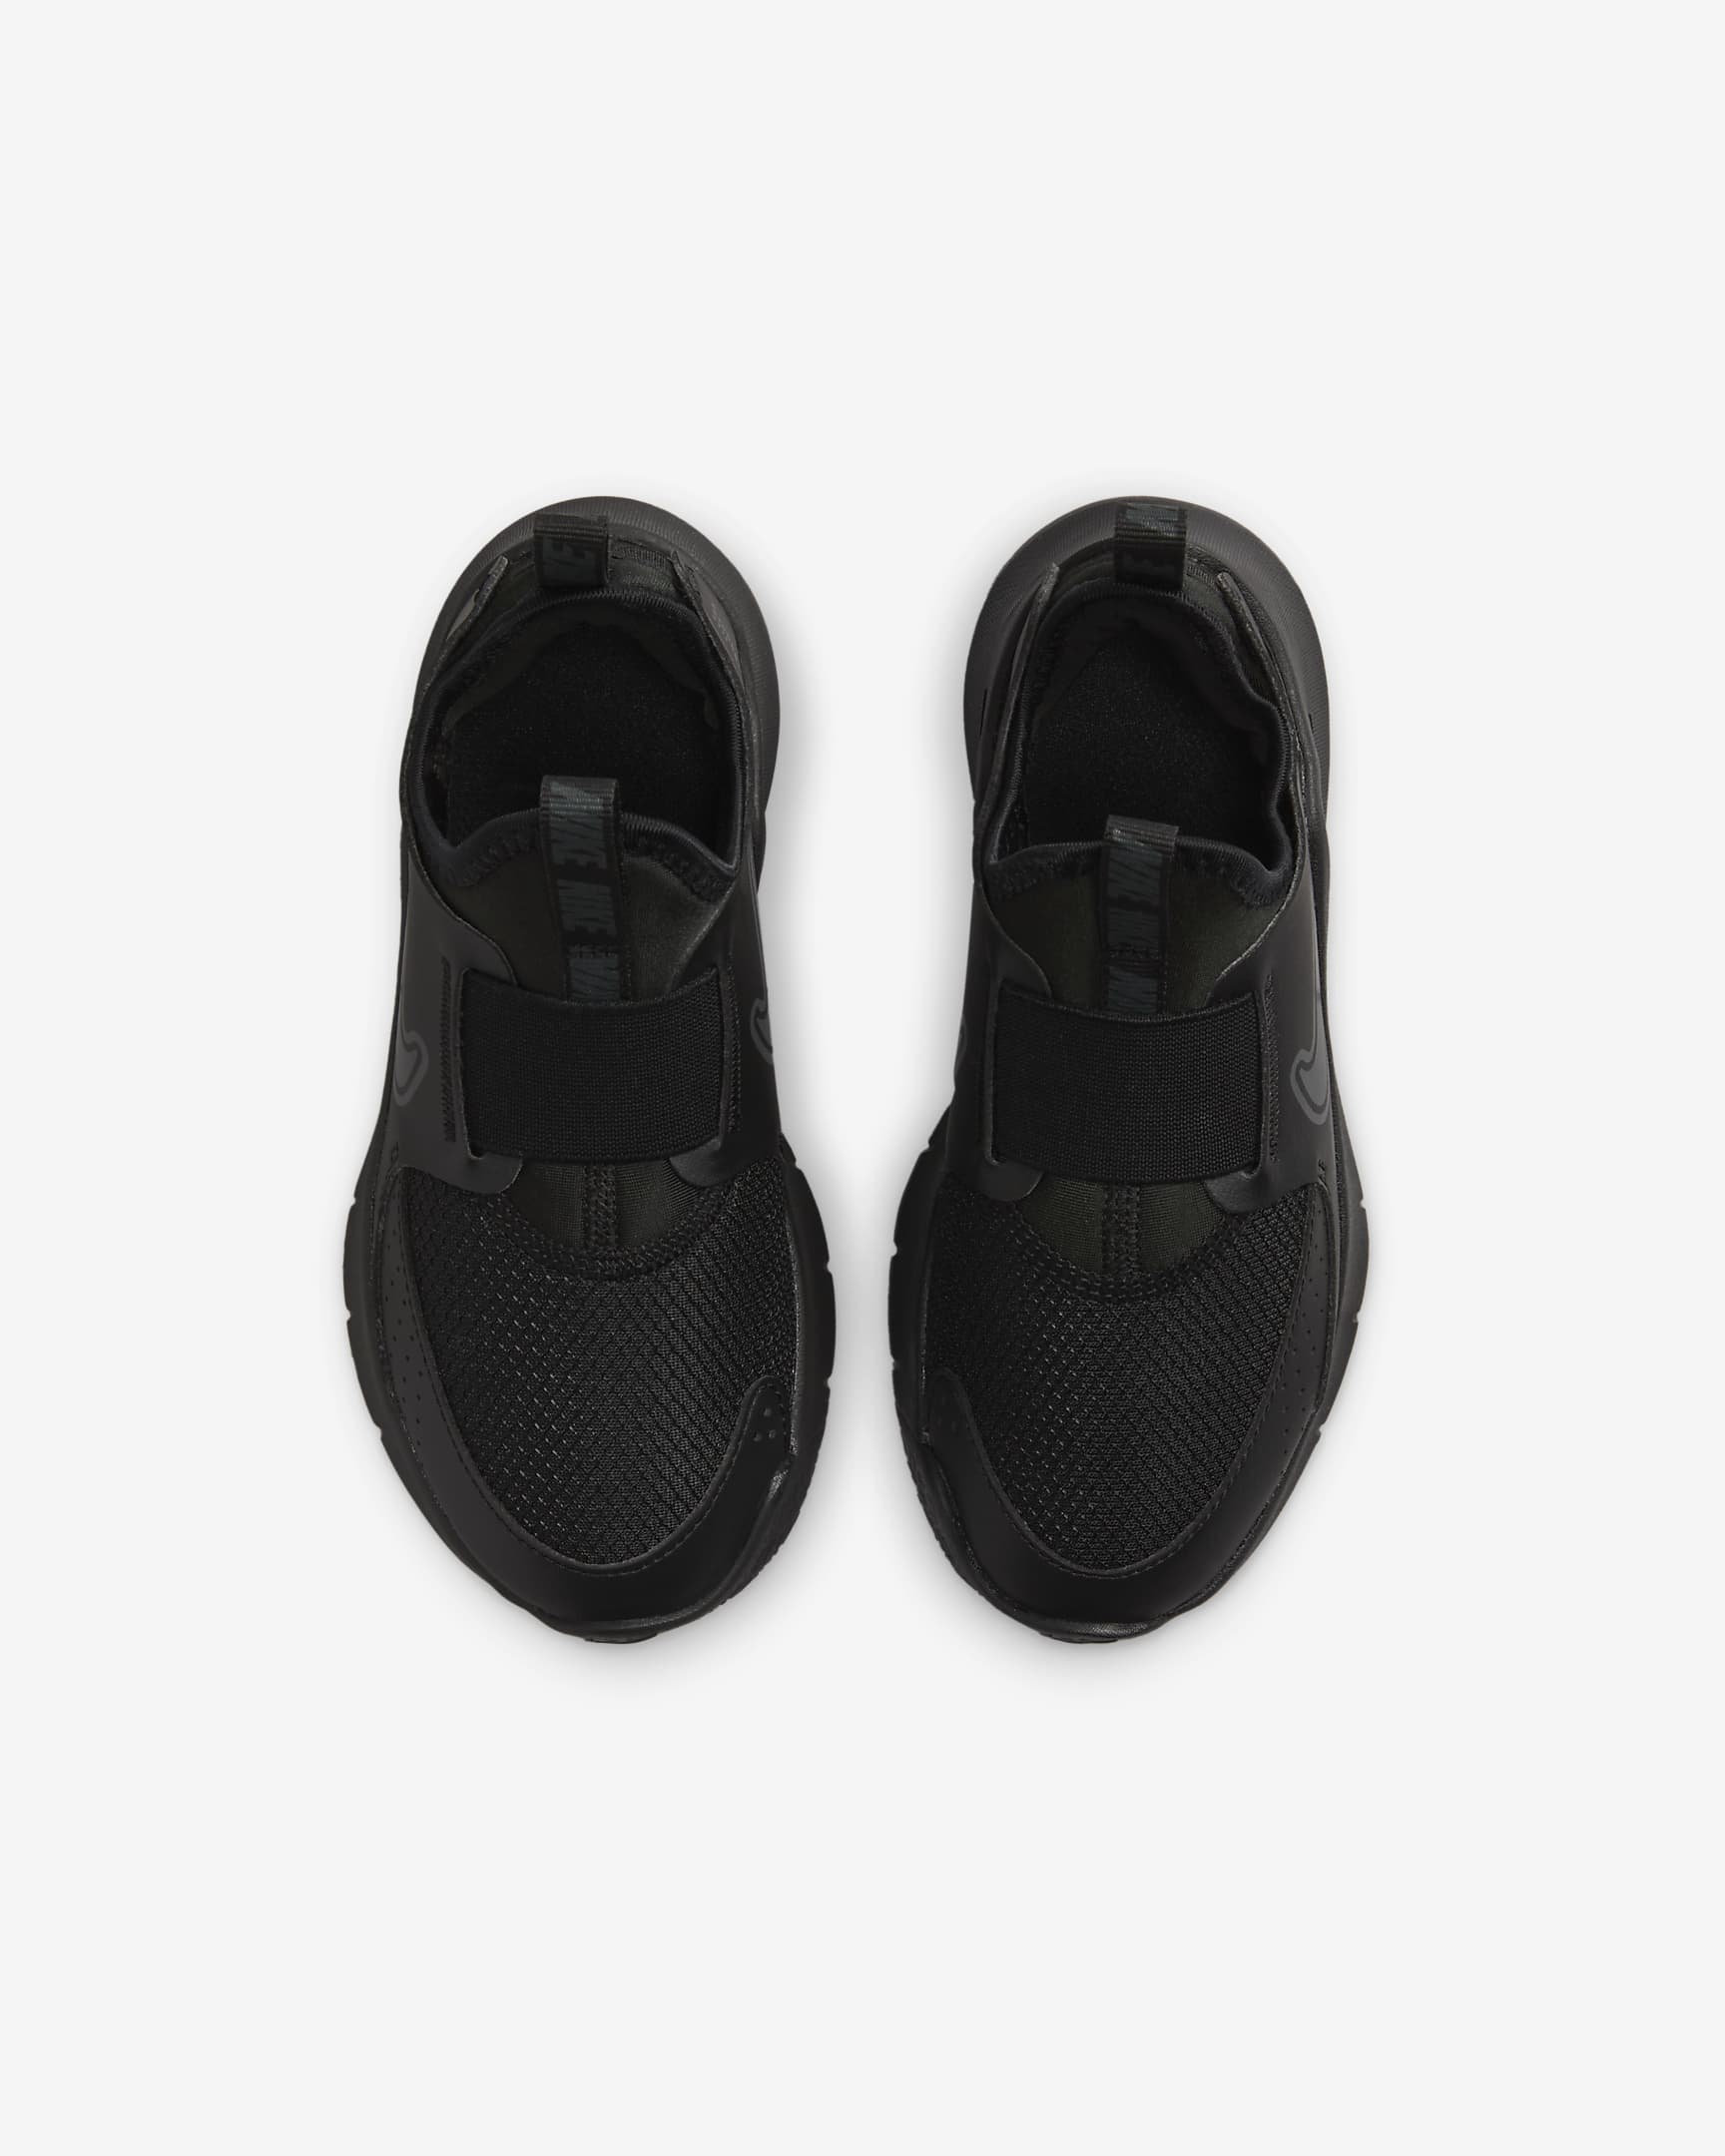 Nike Flex Runner 3 Younger Kids' Shoes - Black/Black/Anthracite